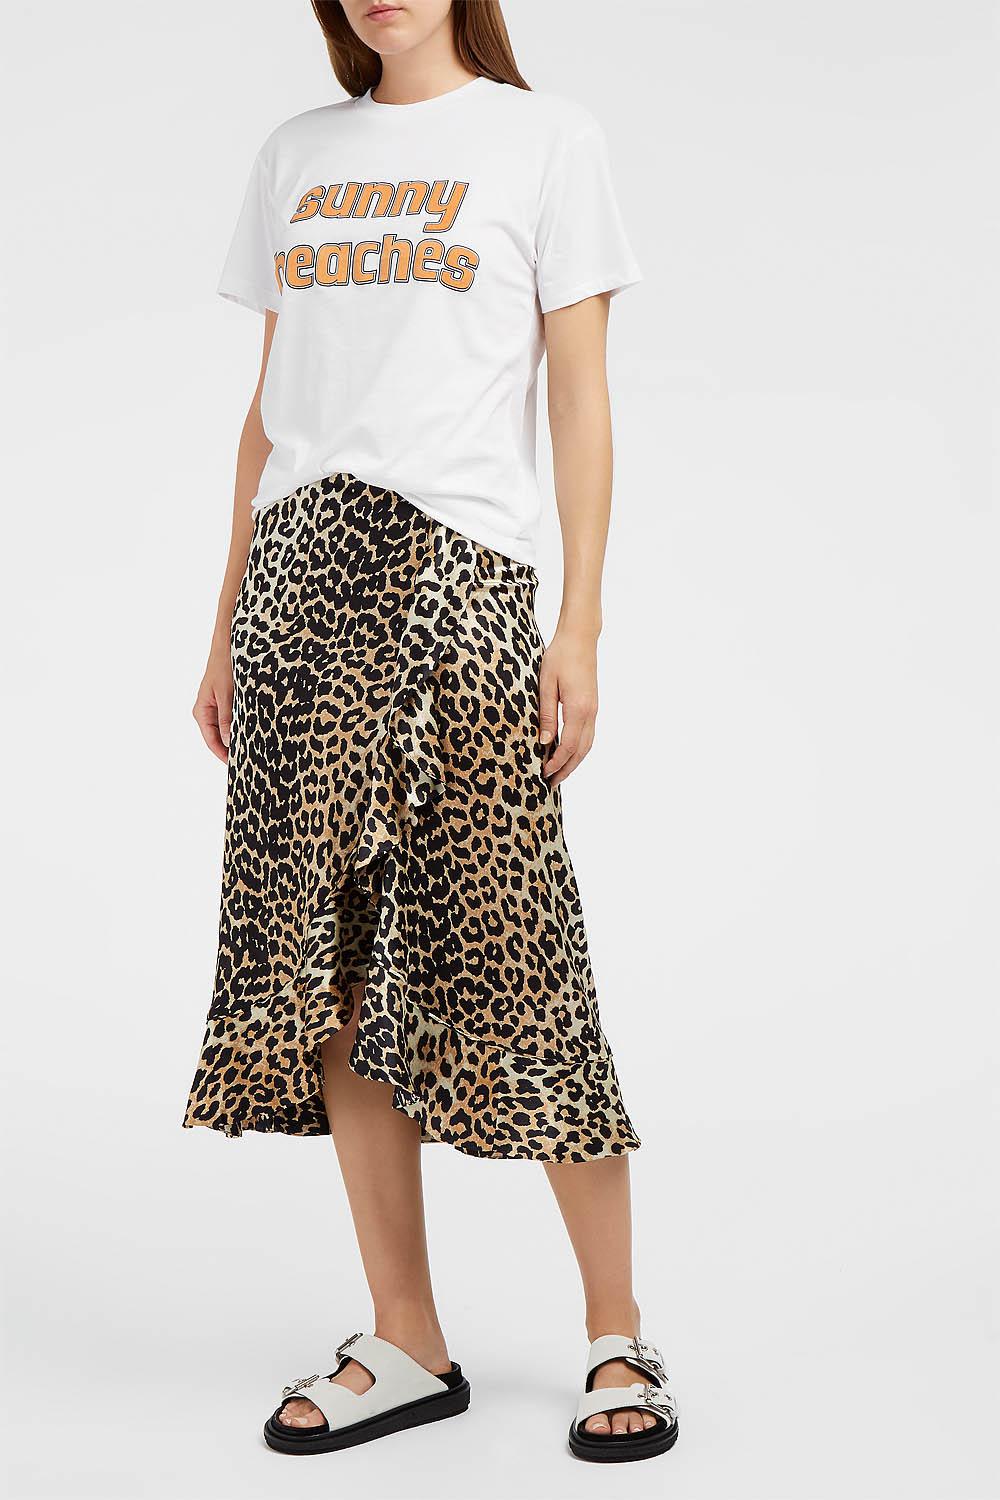 Ganni Dufort Ruffle-trimmed Leopard-print Stretch-silk Skirt in Black - Lyst